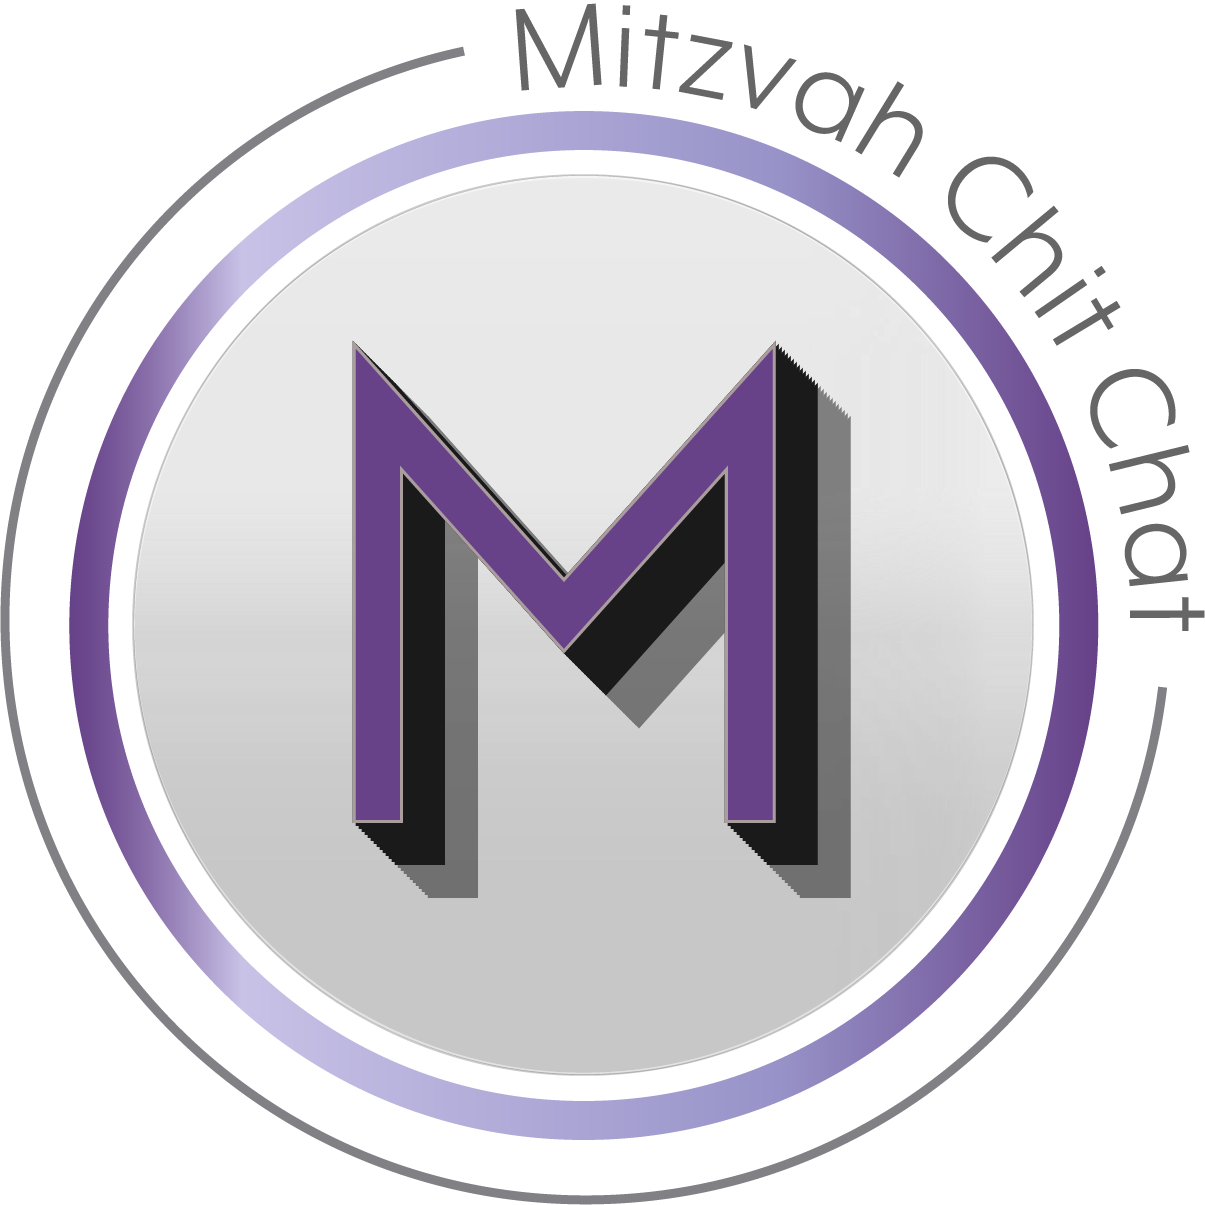 Mitzvah Chit Chat